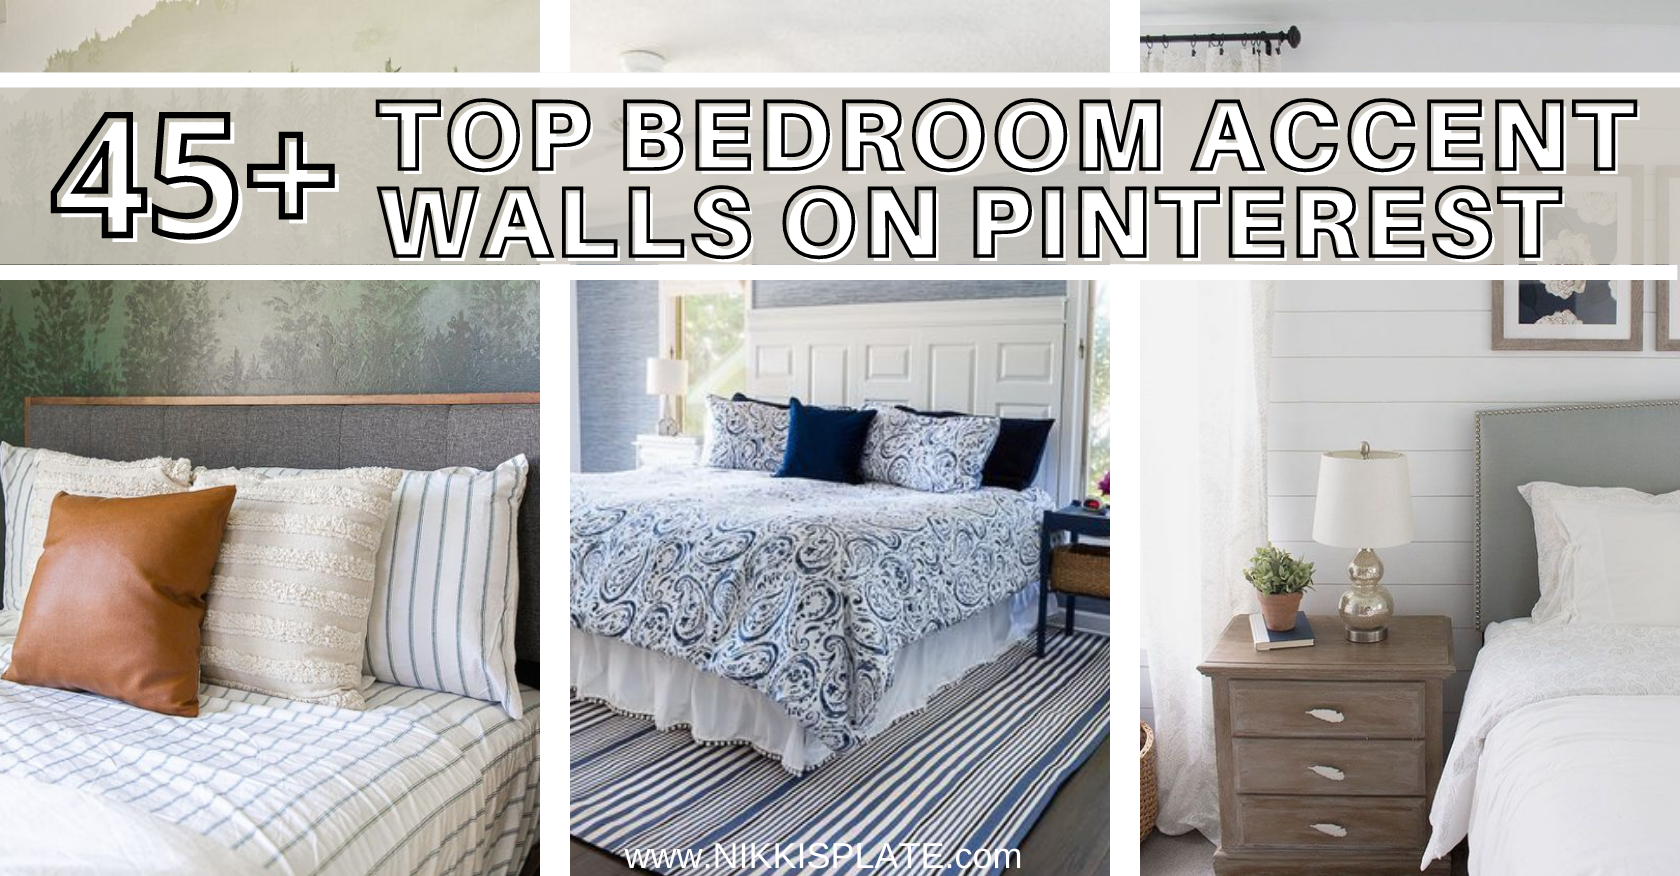 21 Best Gold tape ideas  herringbone wall, accent wall bedroom, wall design